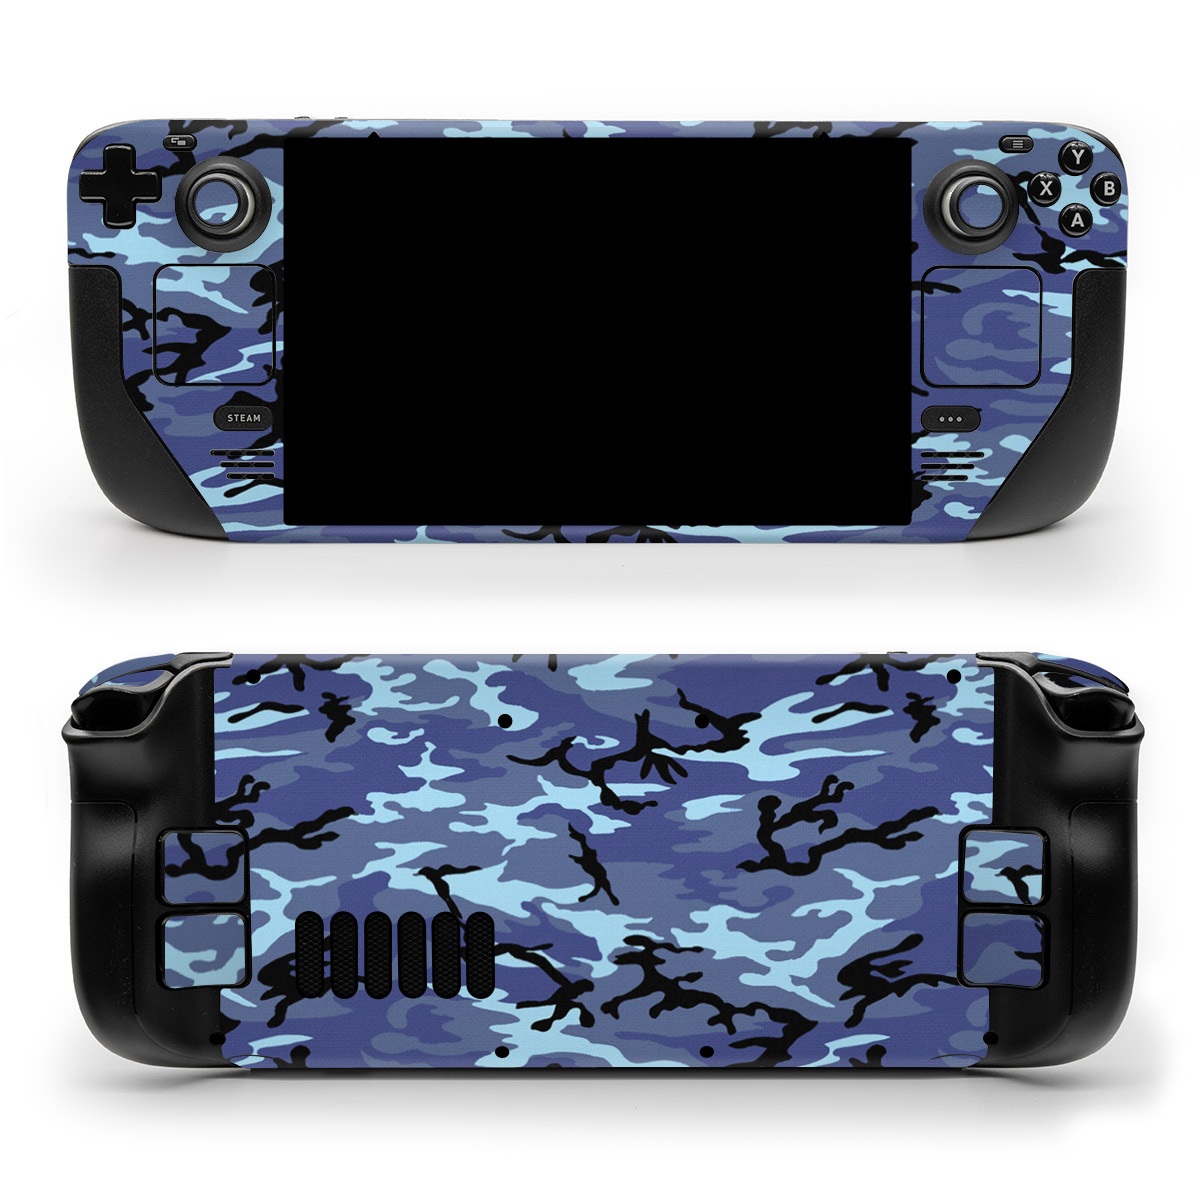 Valve Steam Deck Skin design of Military camouflage, Pattern, Blue, Aqua, Teal, Design, Camouflage, Textile, Uniform, with blue, black, gray, purple colors